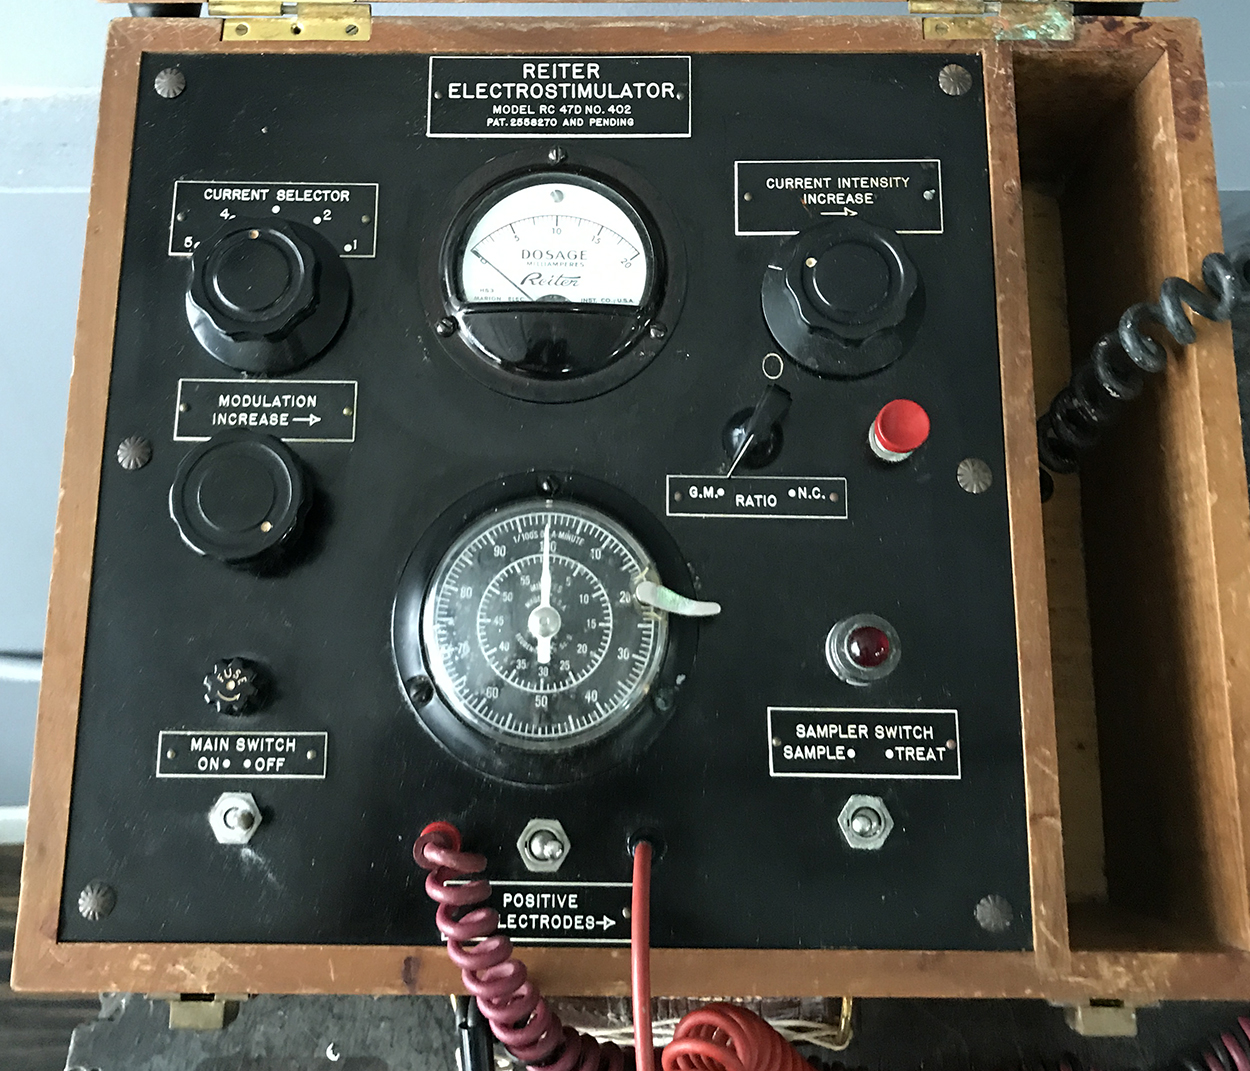 Equipment - 'Electroshock Therapy' Machine, Konvulsator 2077, Post